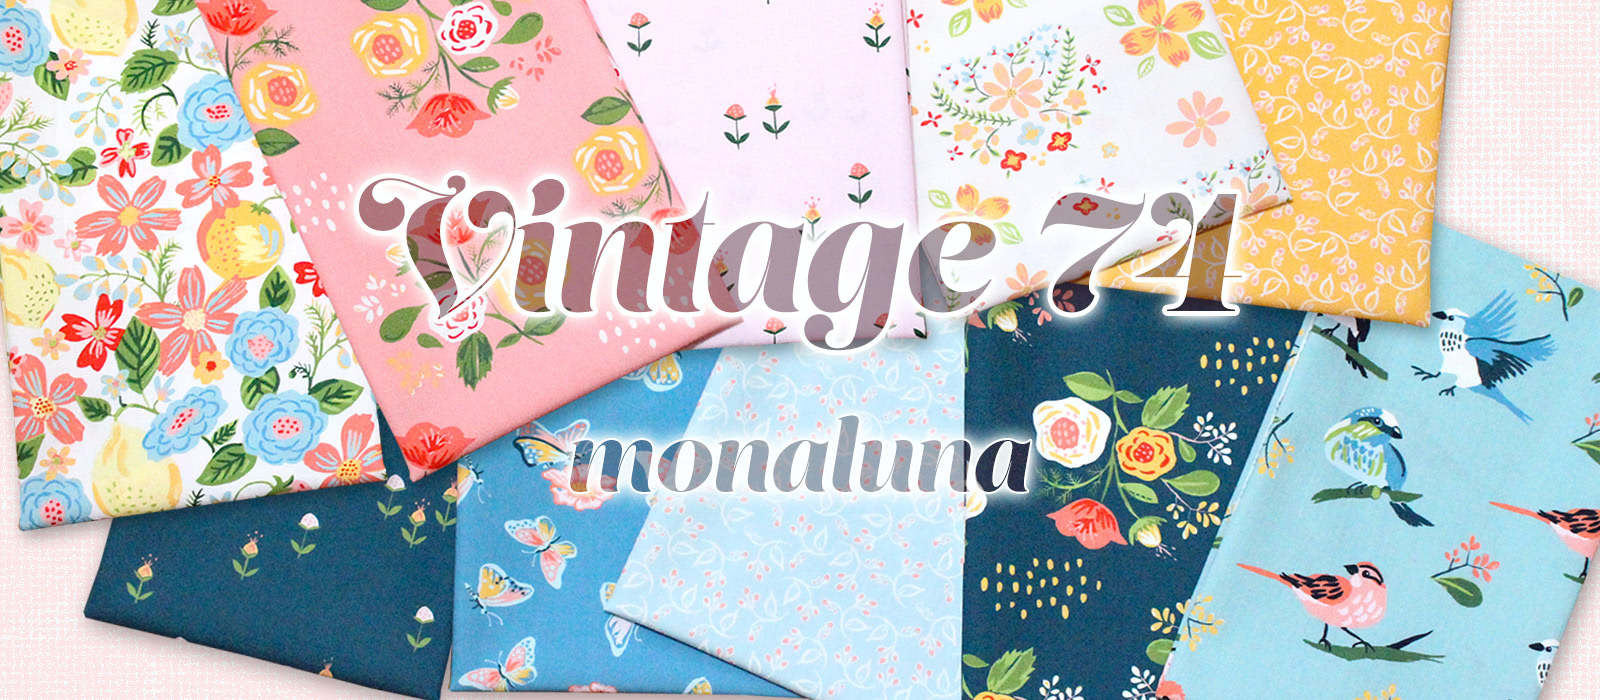 Monaluna Vintage 74 Collection by Jennifer Moore